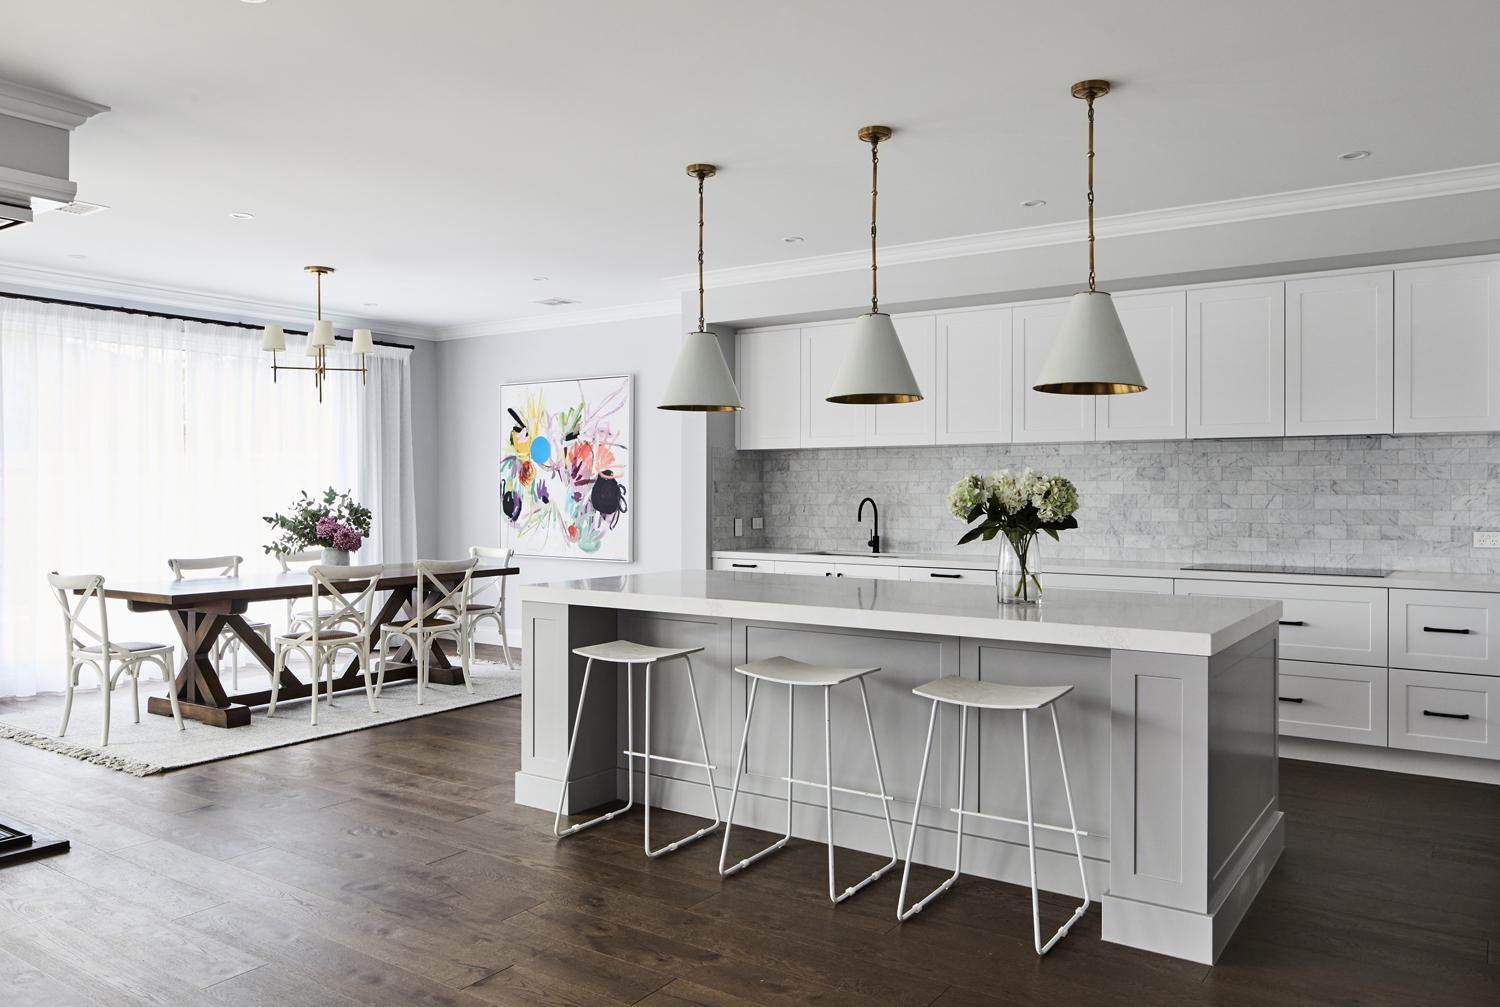 Hamptons style kitchen by Thomas Archer